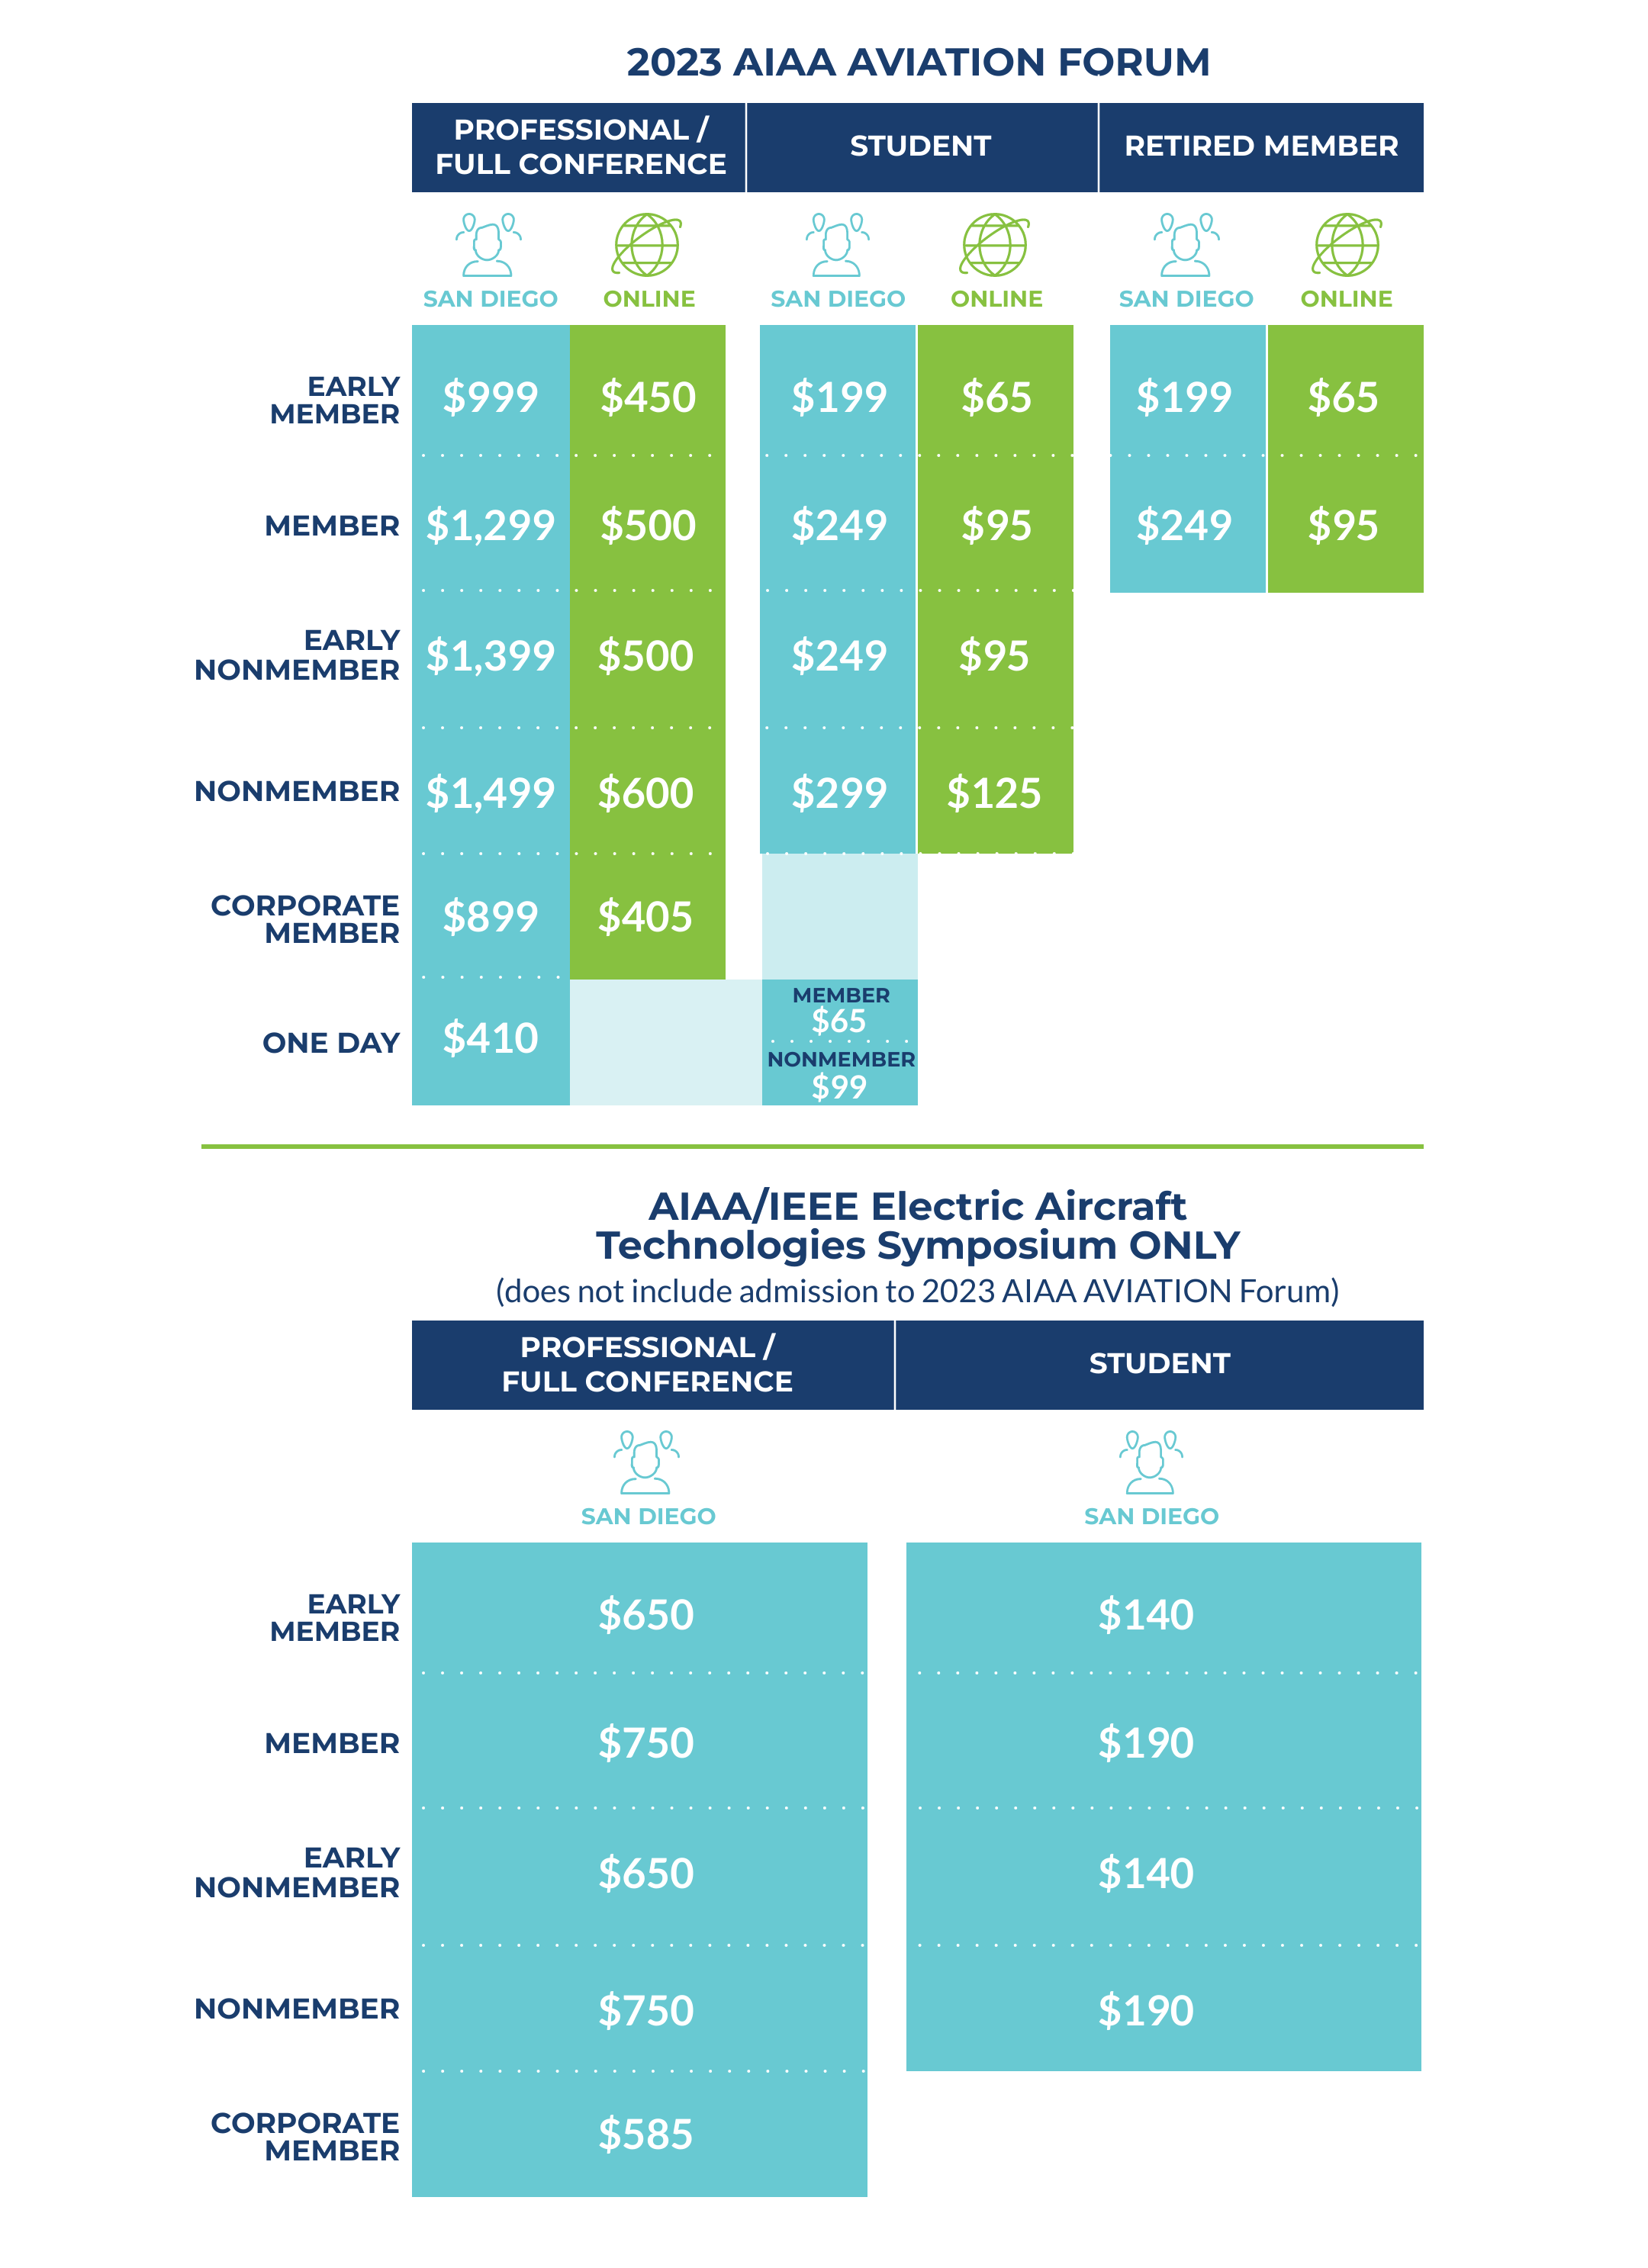 2023 AIAA AVIATION Forum Registration Prices